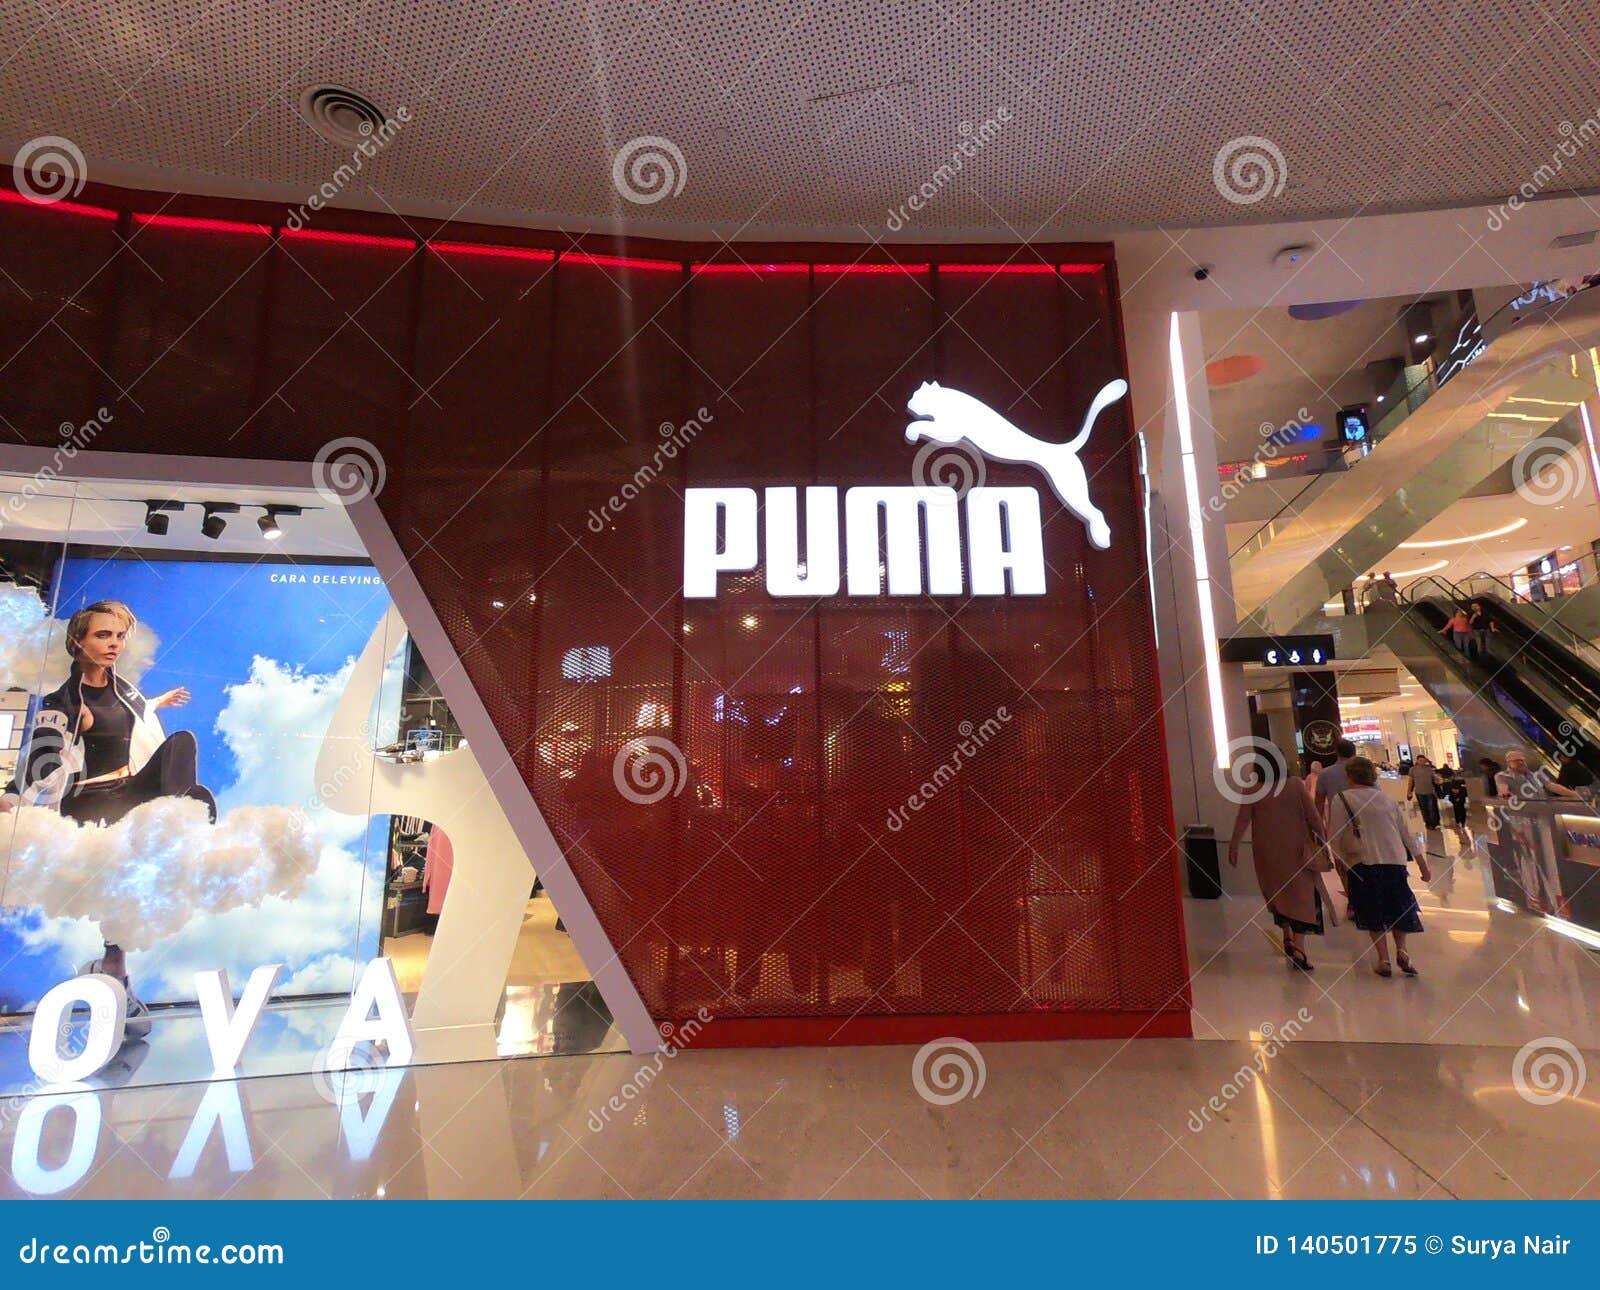 where is puma located